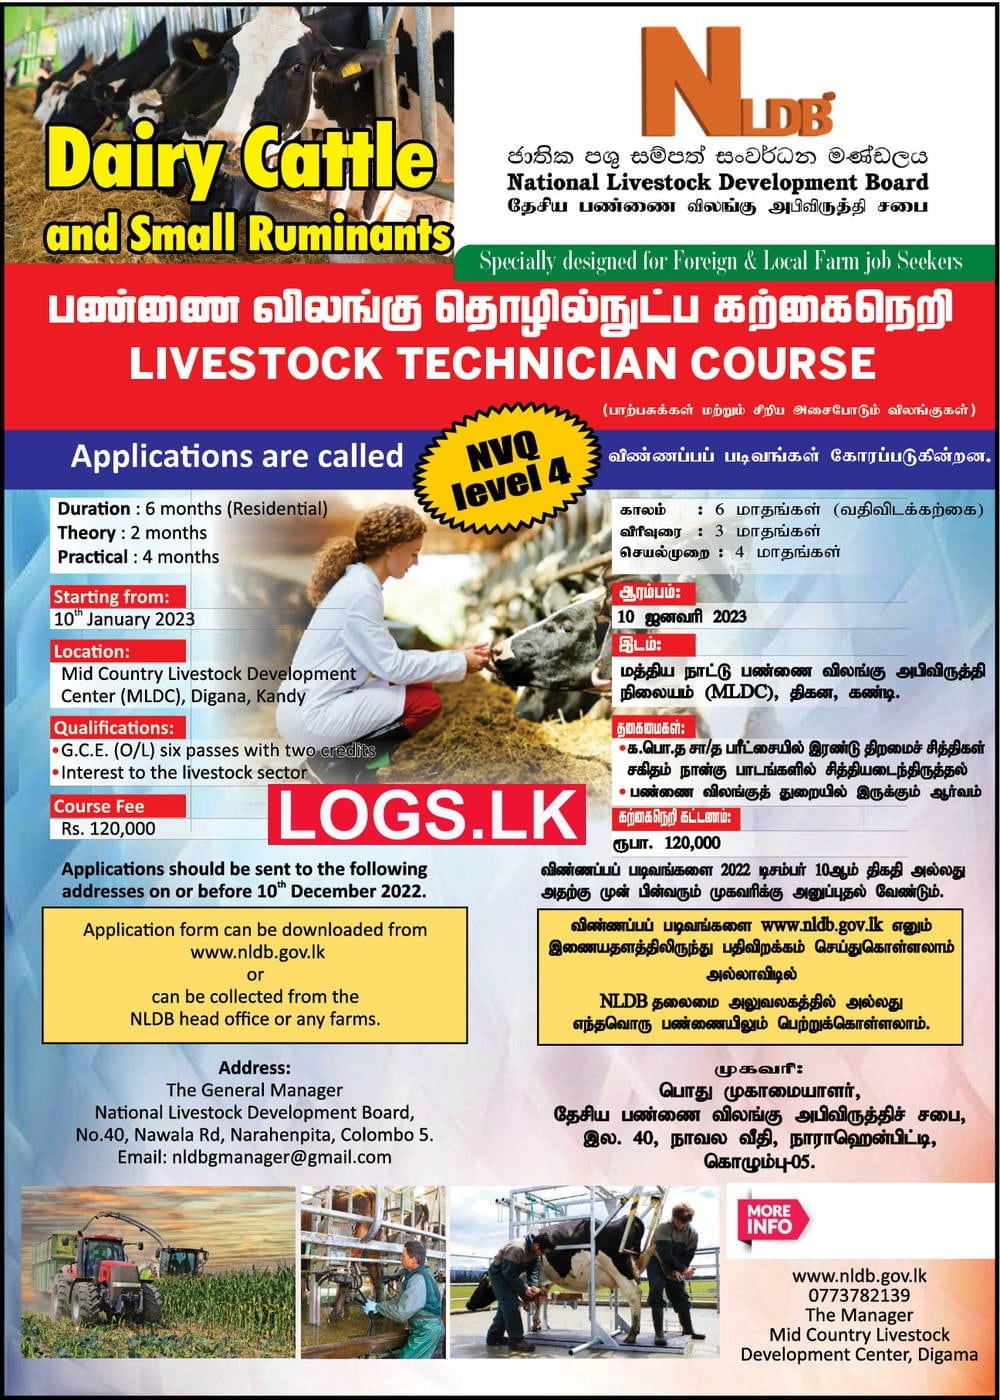 Livestock Technician Course NVQ 4 - National Livestock Development Board Course Details, Application Form Download